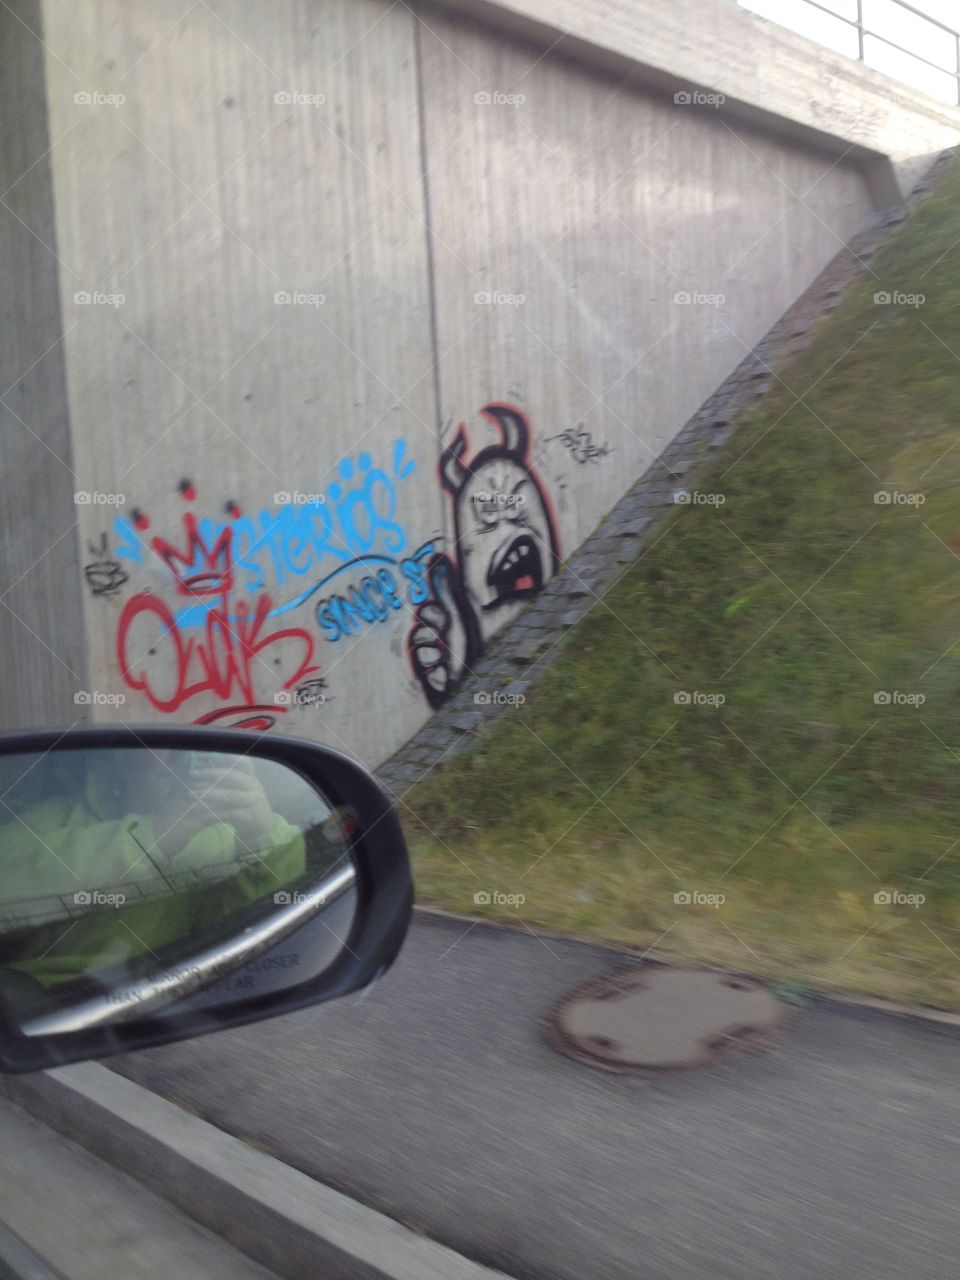 Graffiti in Germany